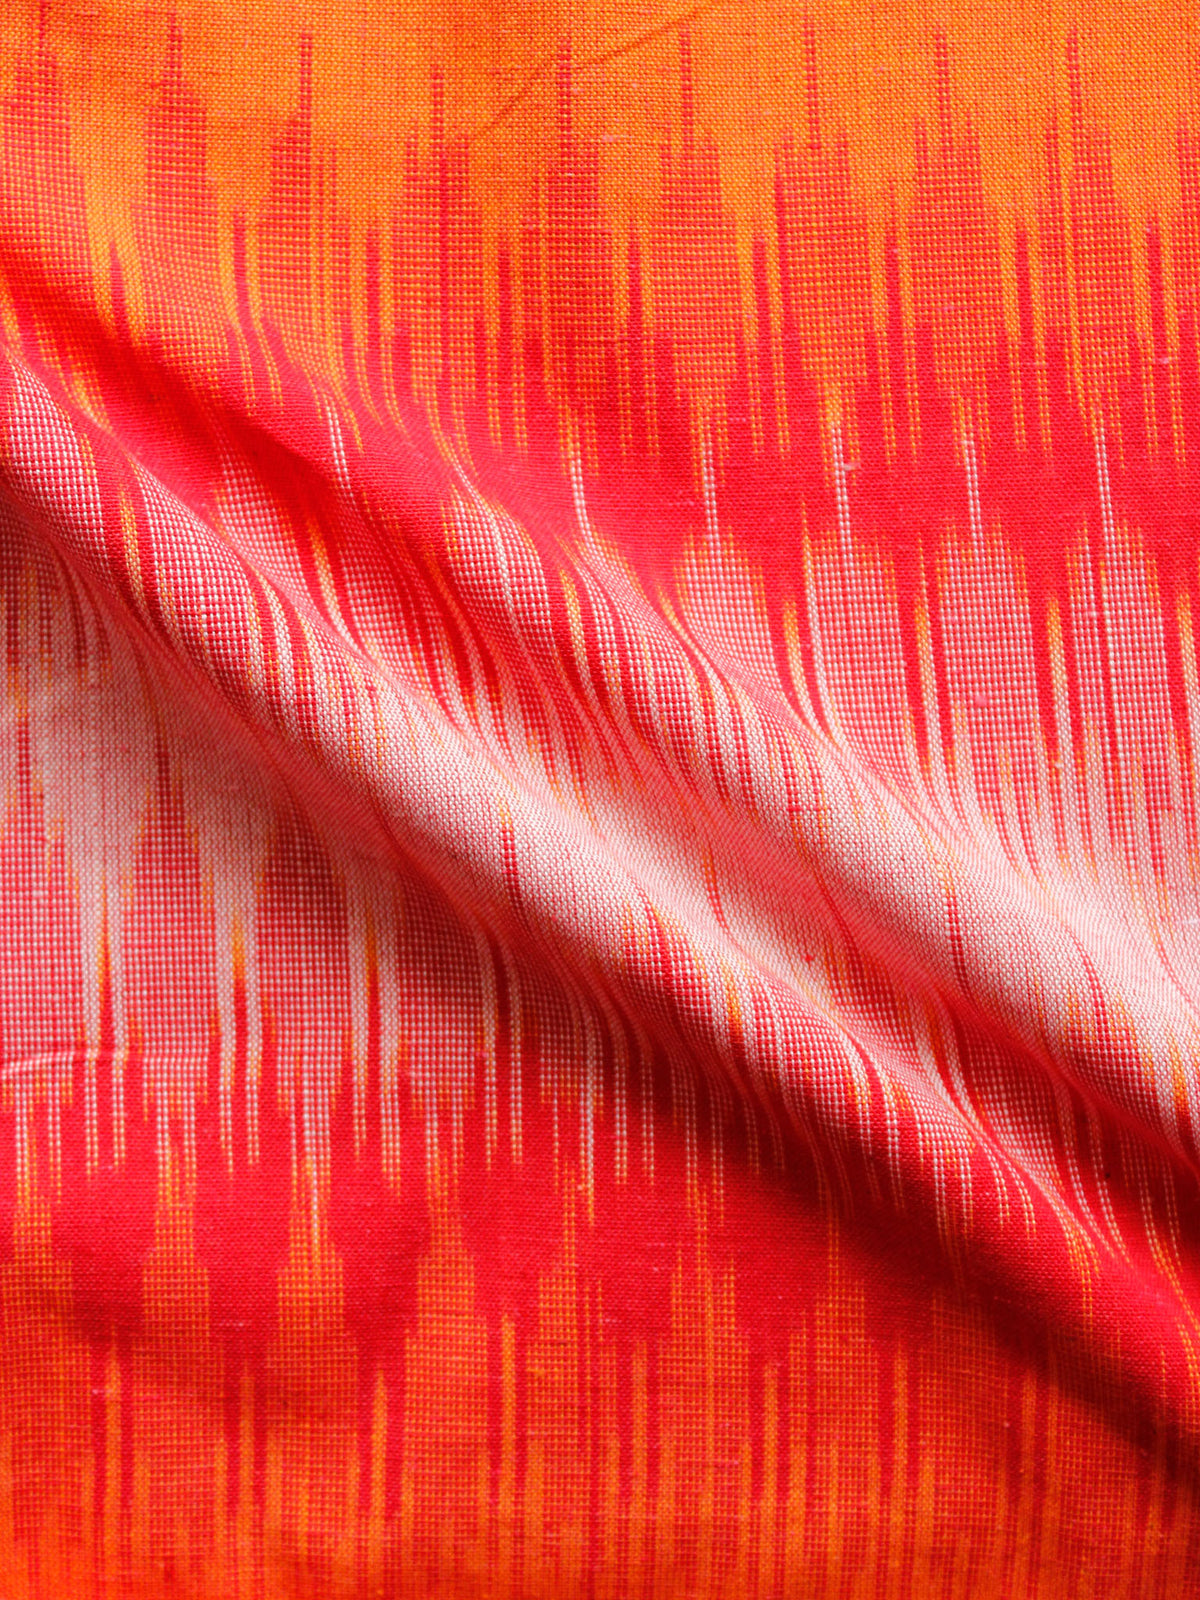 Red Orange White Hand Woven Ikat Handloom Cotton Fabric Per Meter - F002F1454